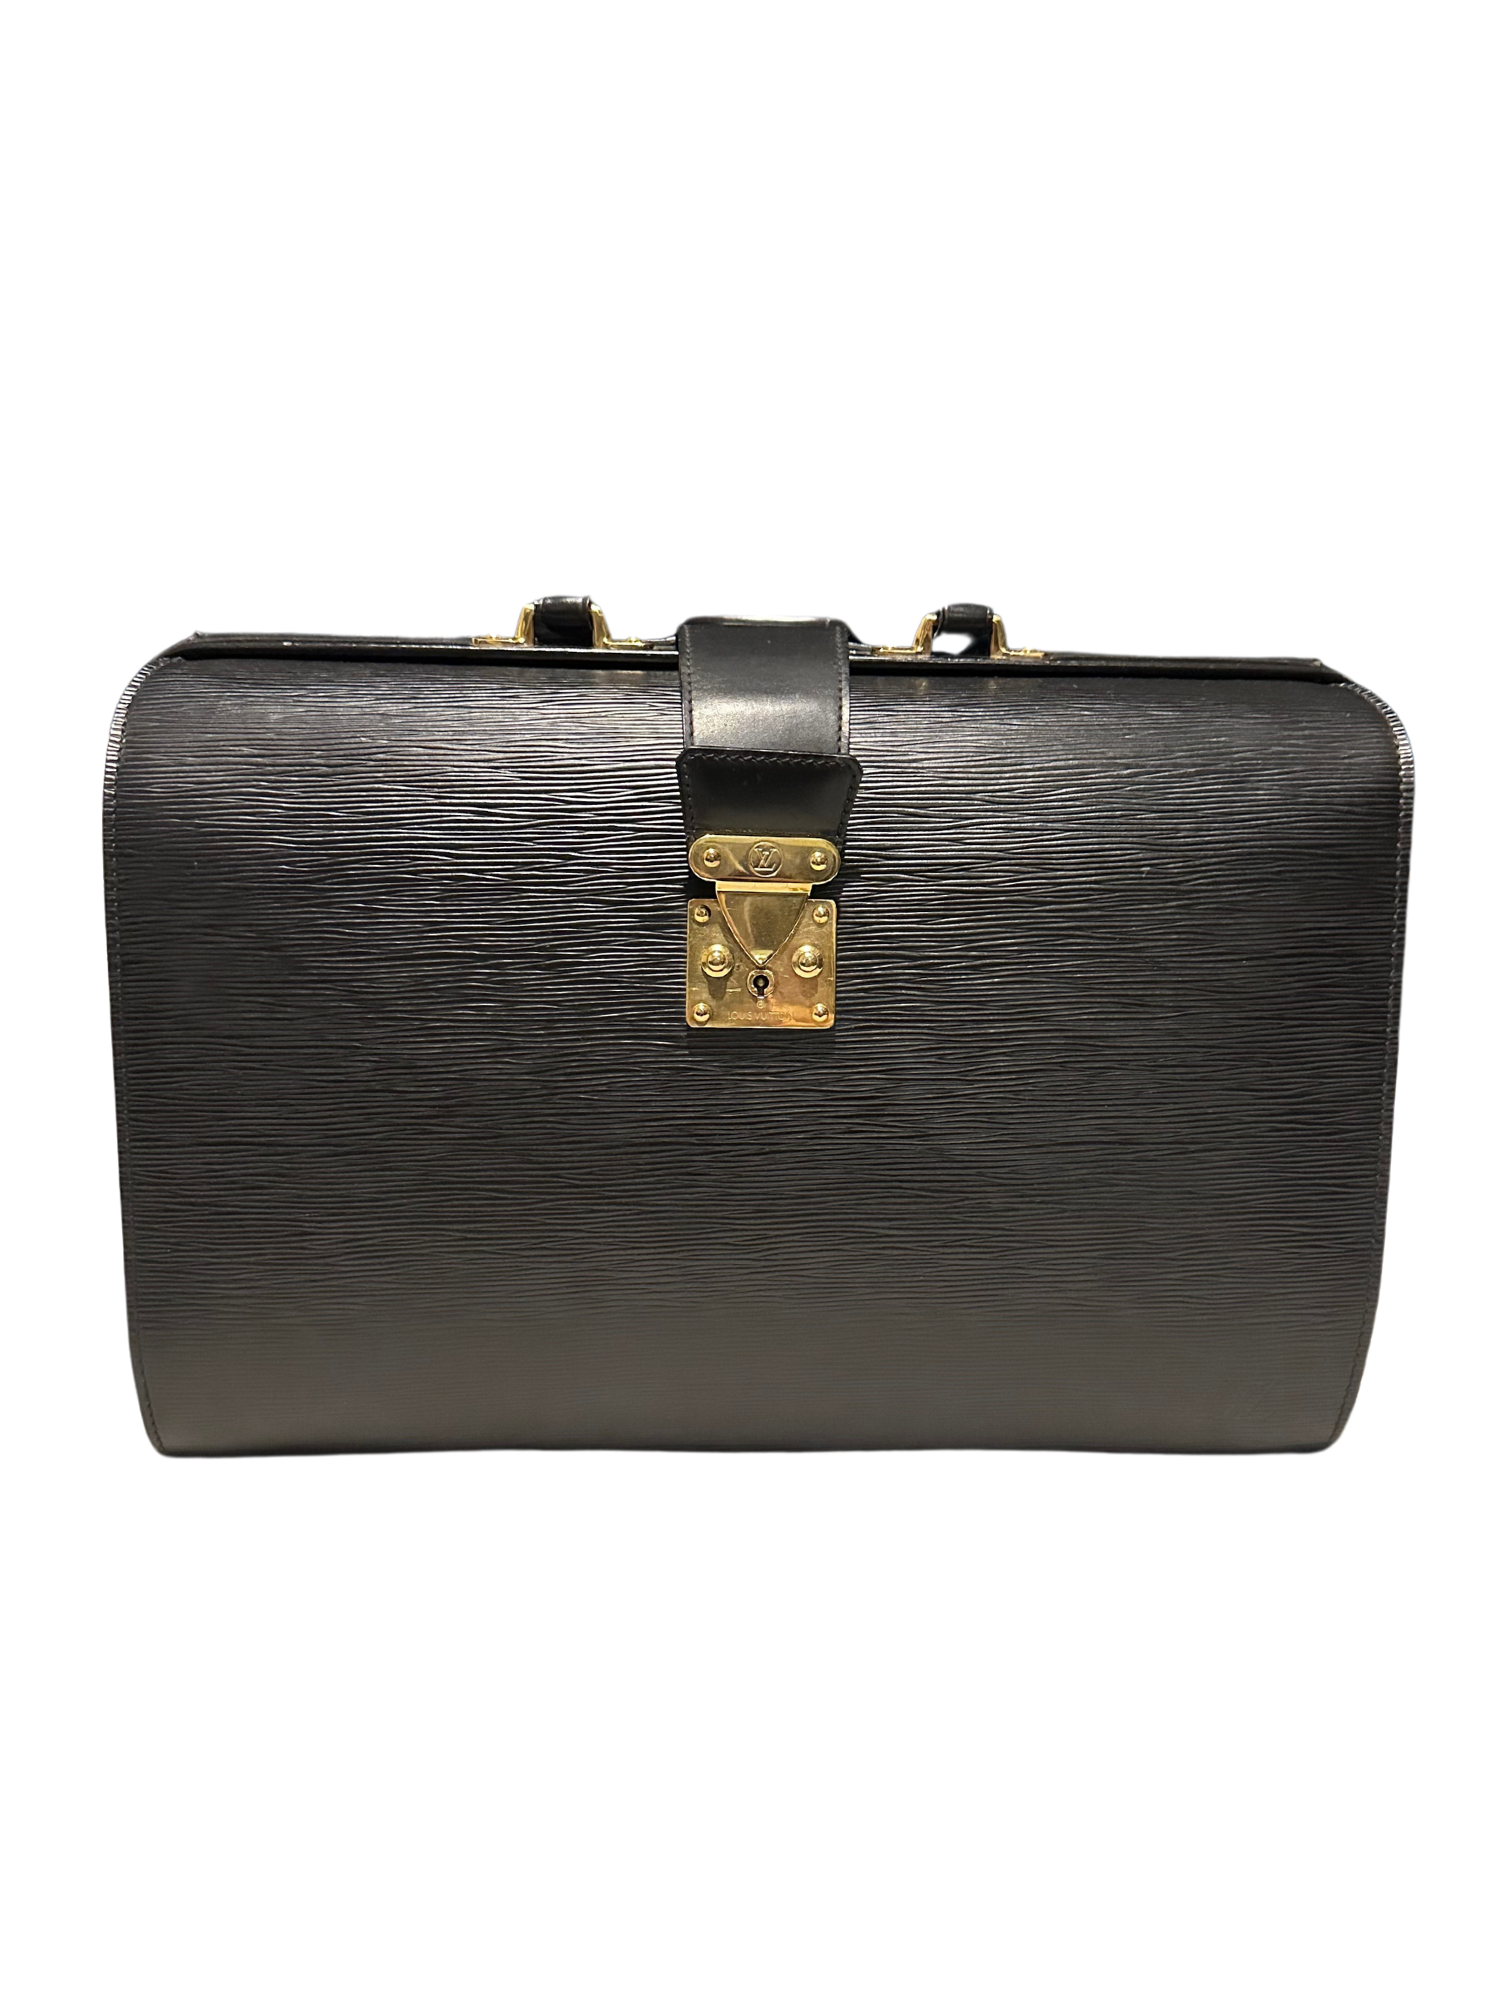 Louis Vuitton Black Epi Leather Serviette Fermoir Briefcase